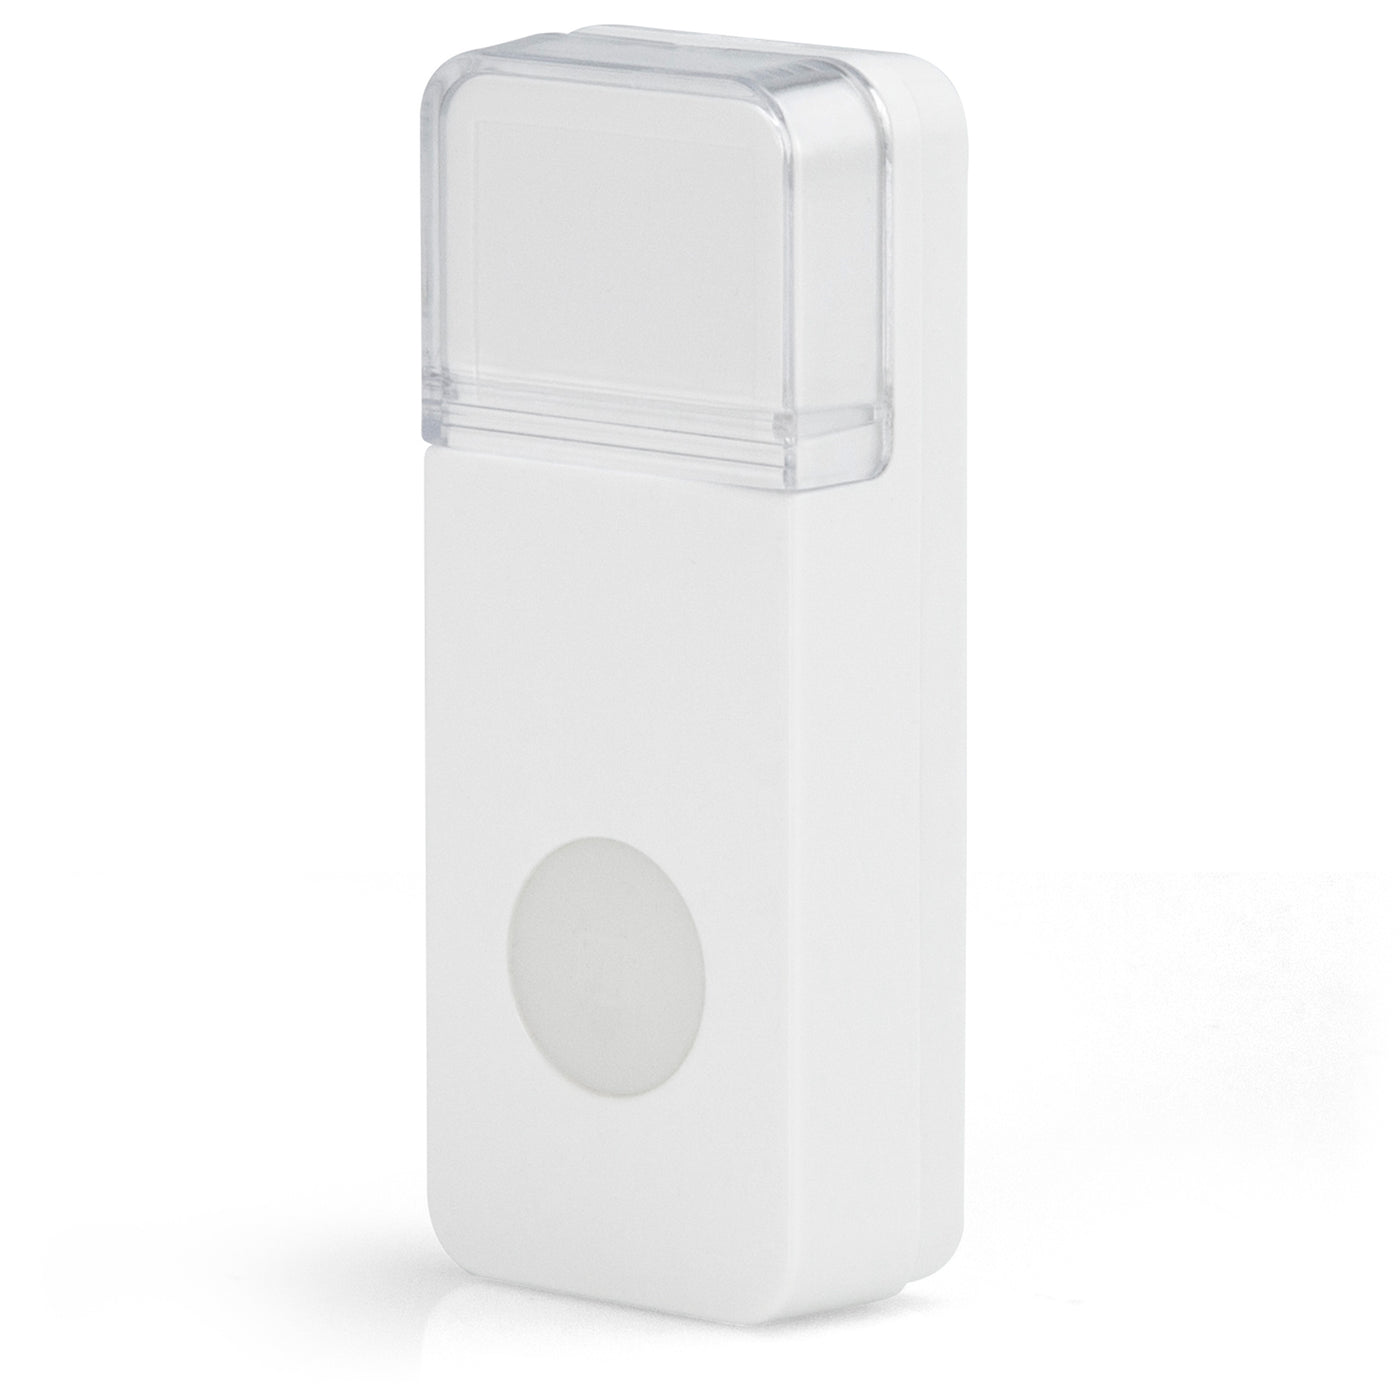 Alecto ADB-19 - Wireless doorbell with flashing light, white